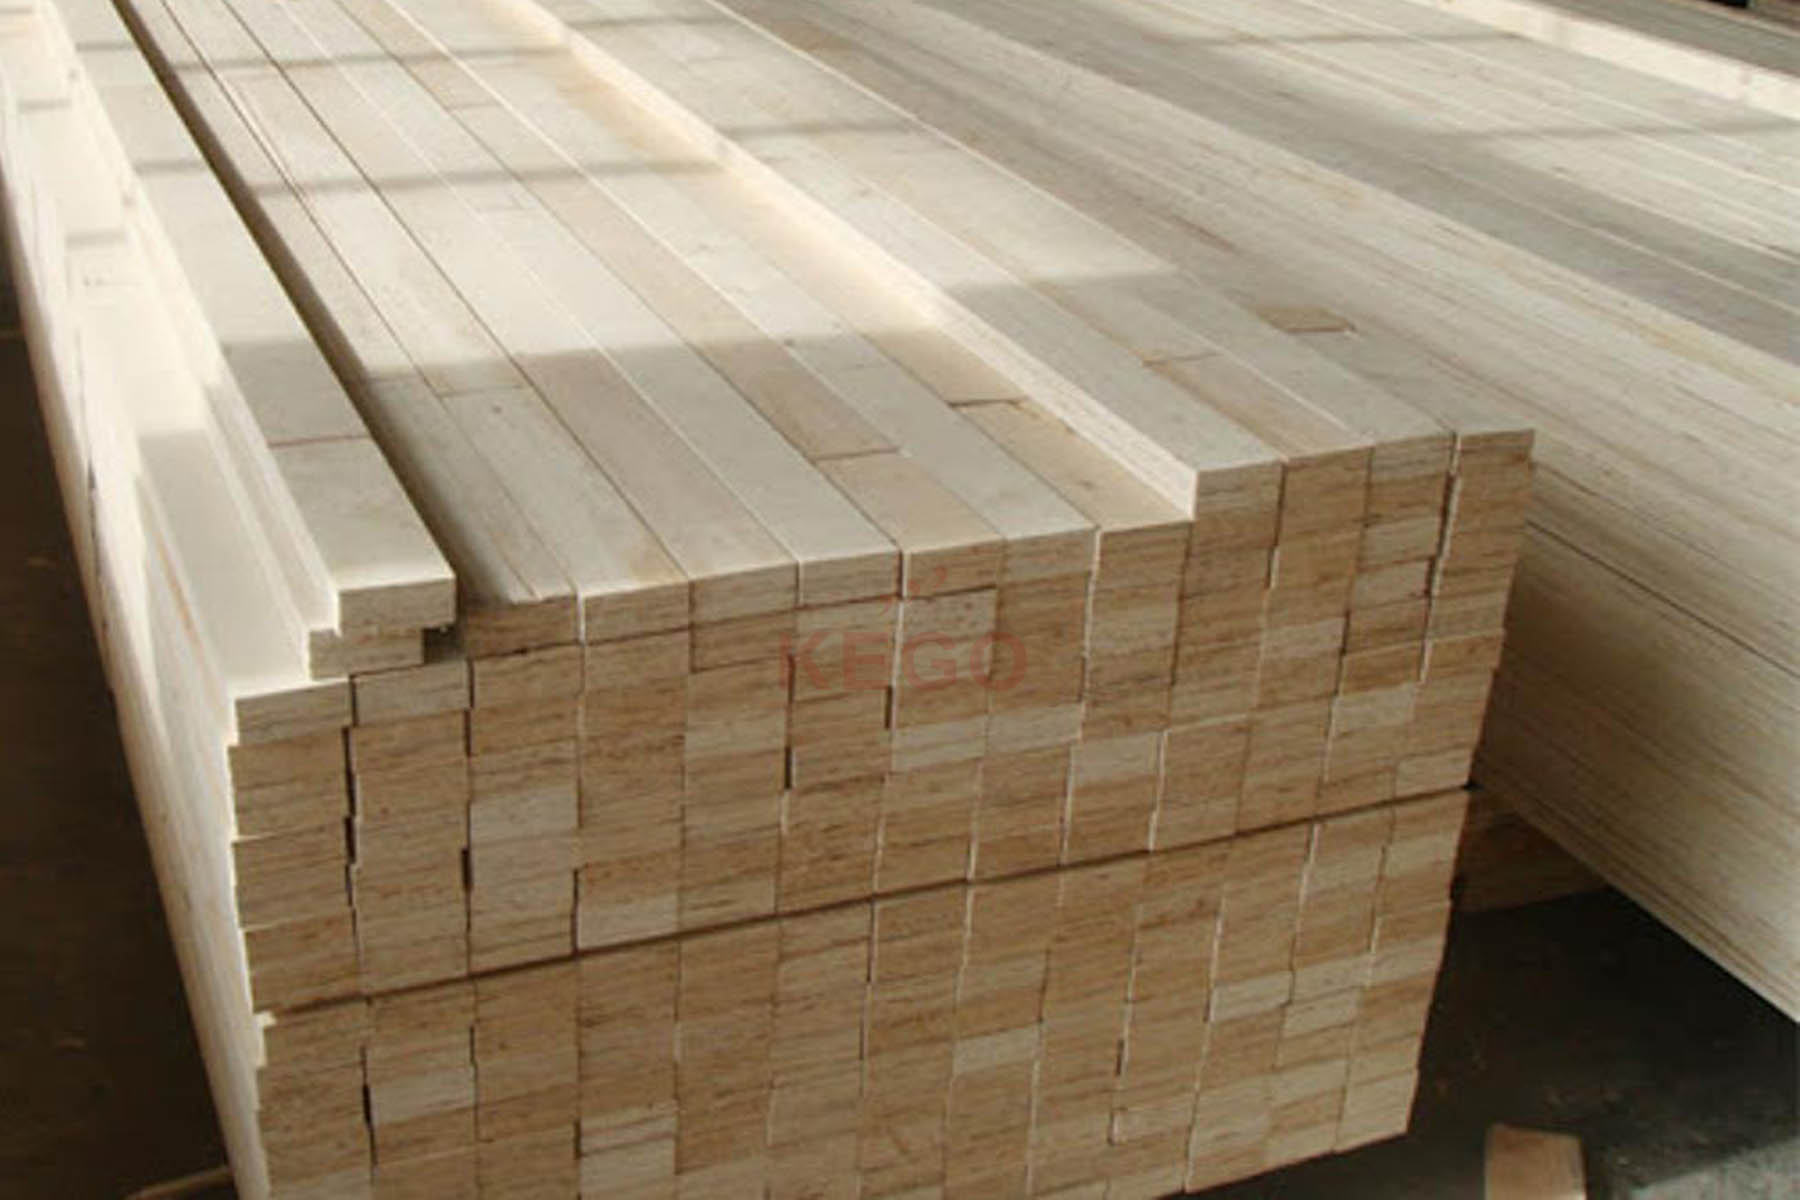 https://kego.com.vn/wp-content/uploads/2015/09/laminated-veneer-lumber-lvl-kego-1.jpg